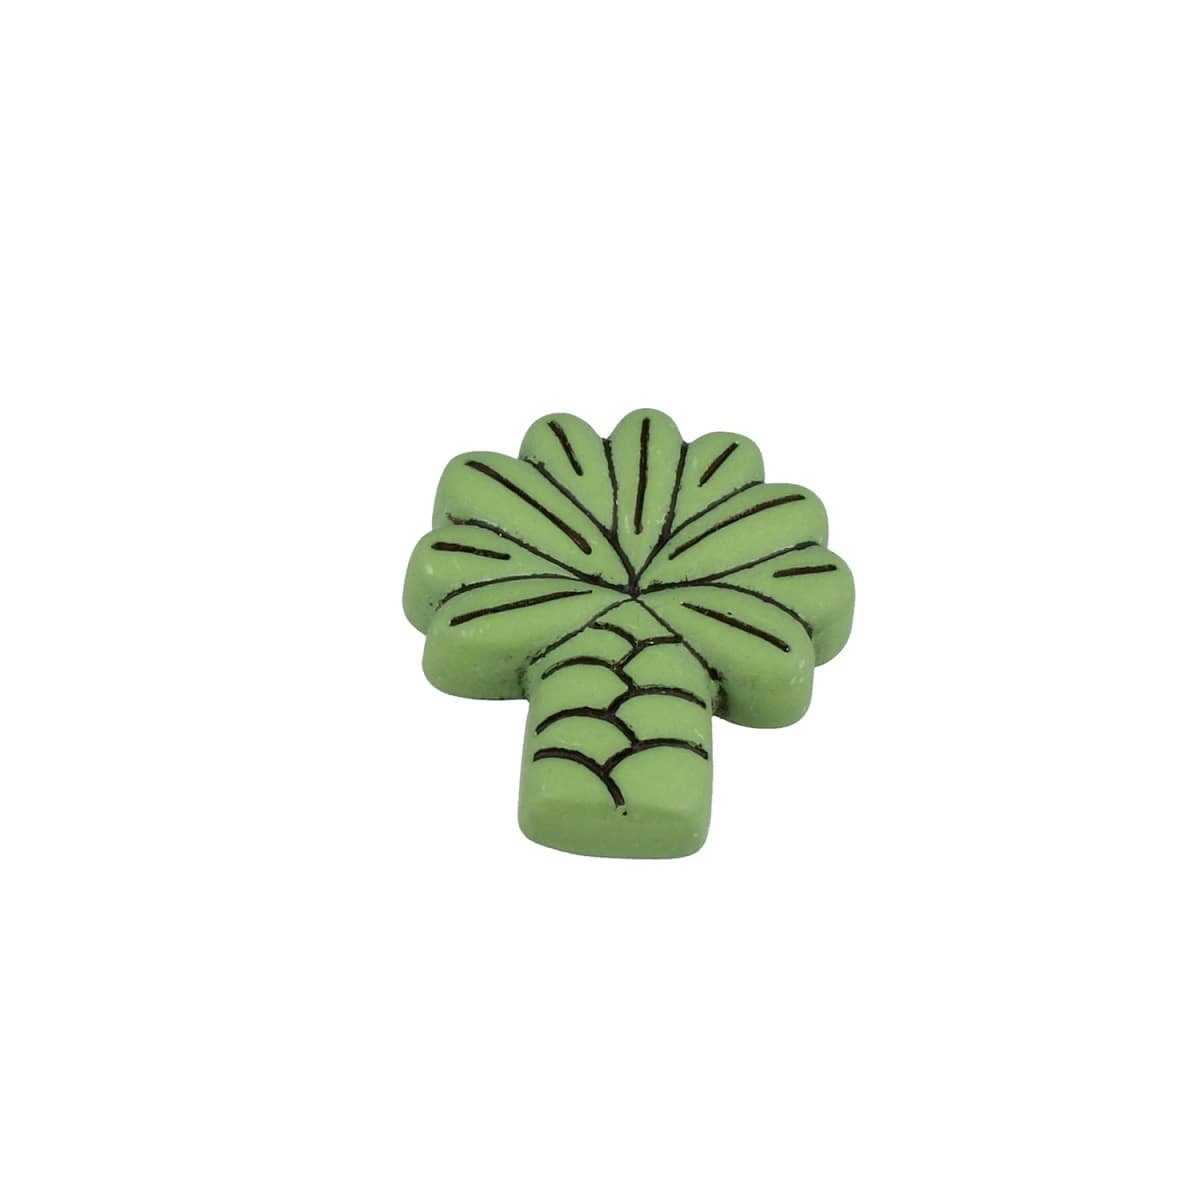 MS Beschläge Türbeschlag Möbelknopf Schrankknopf Kindermöbelknopf Modell Grüne Palme Kommodenkn